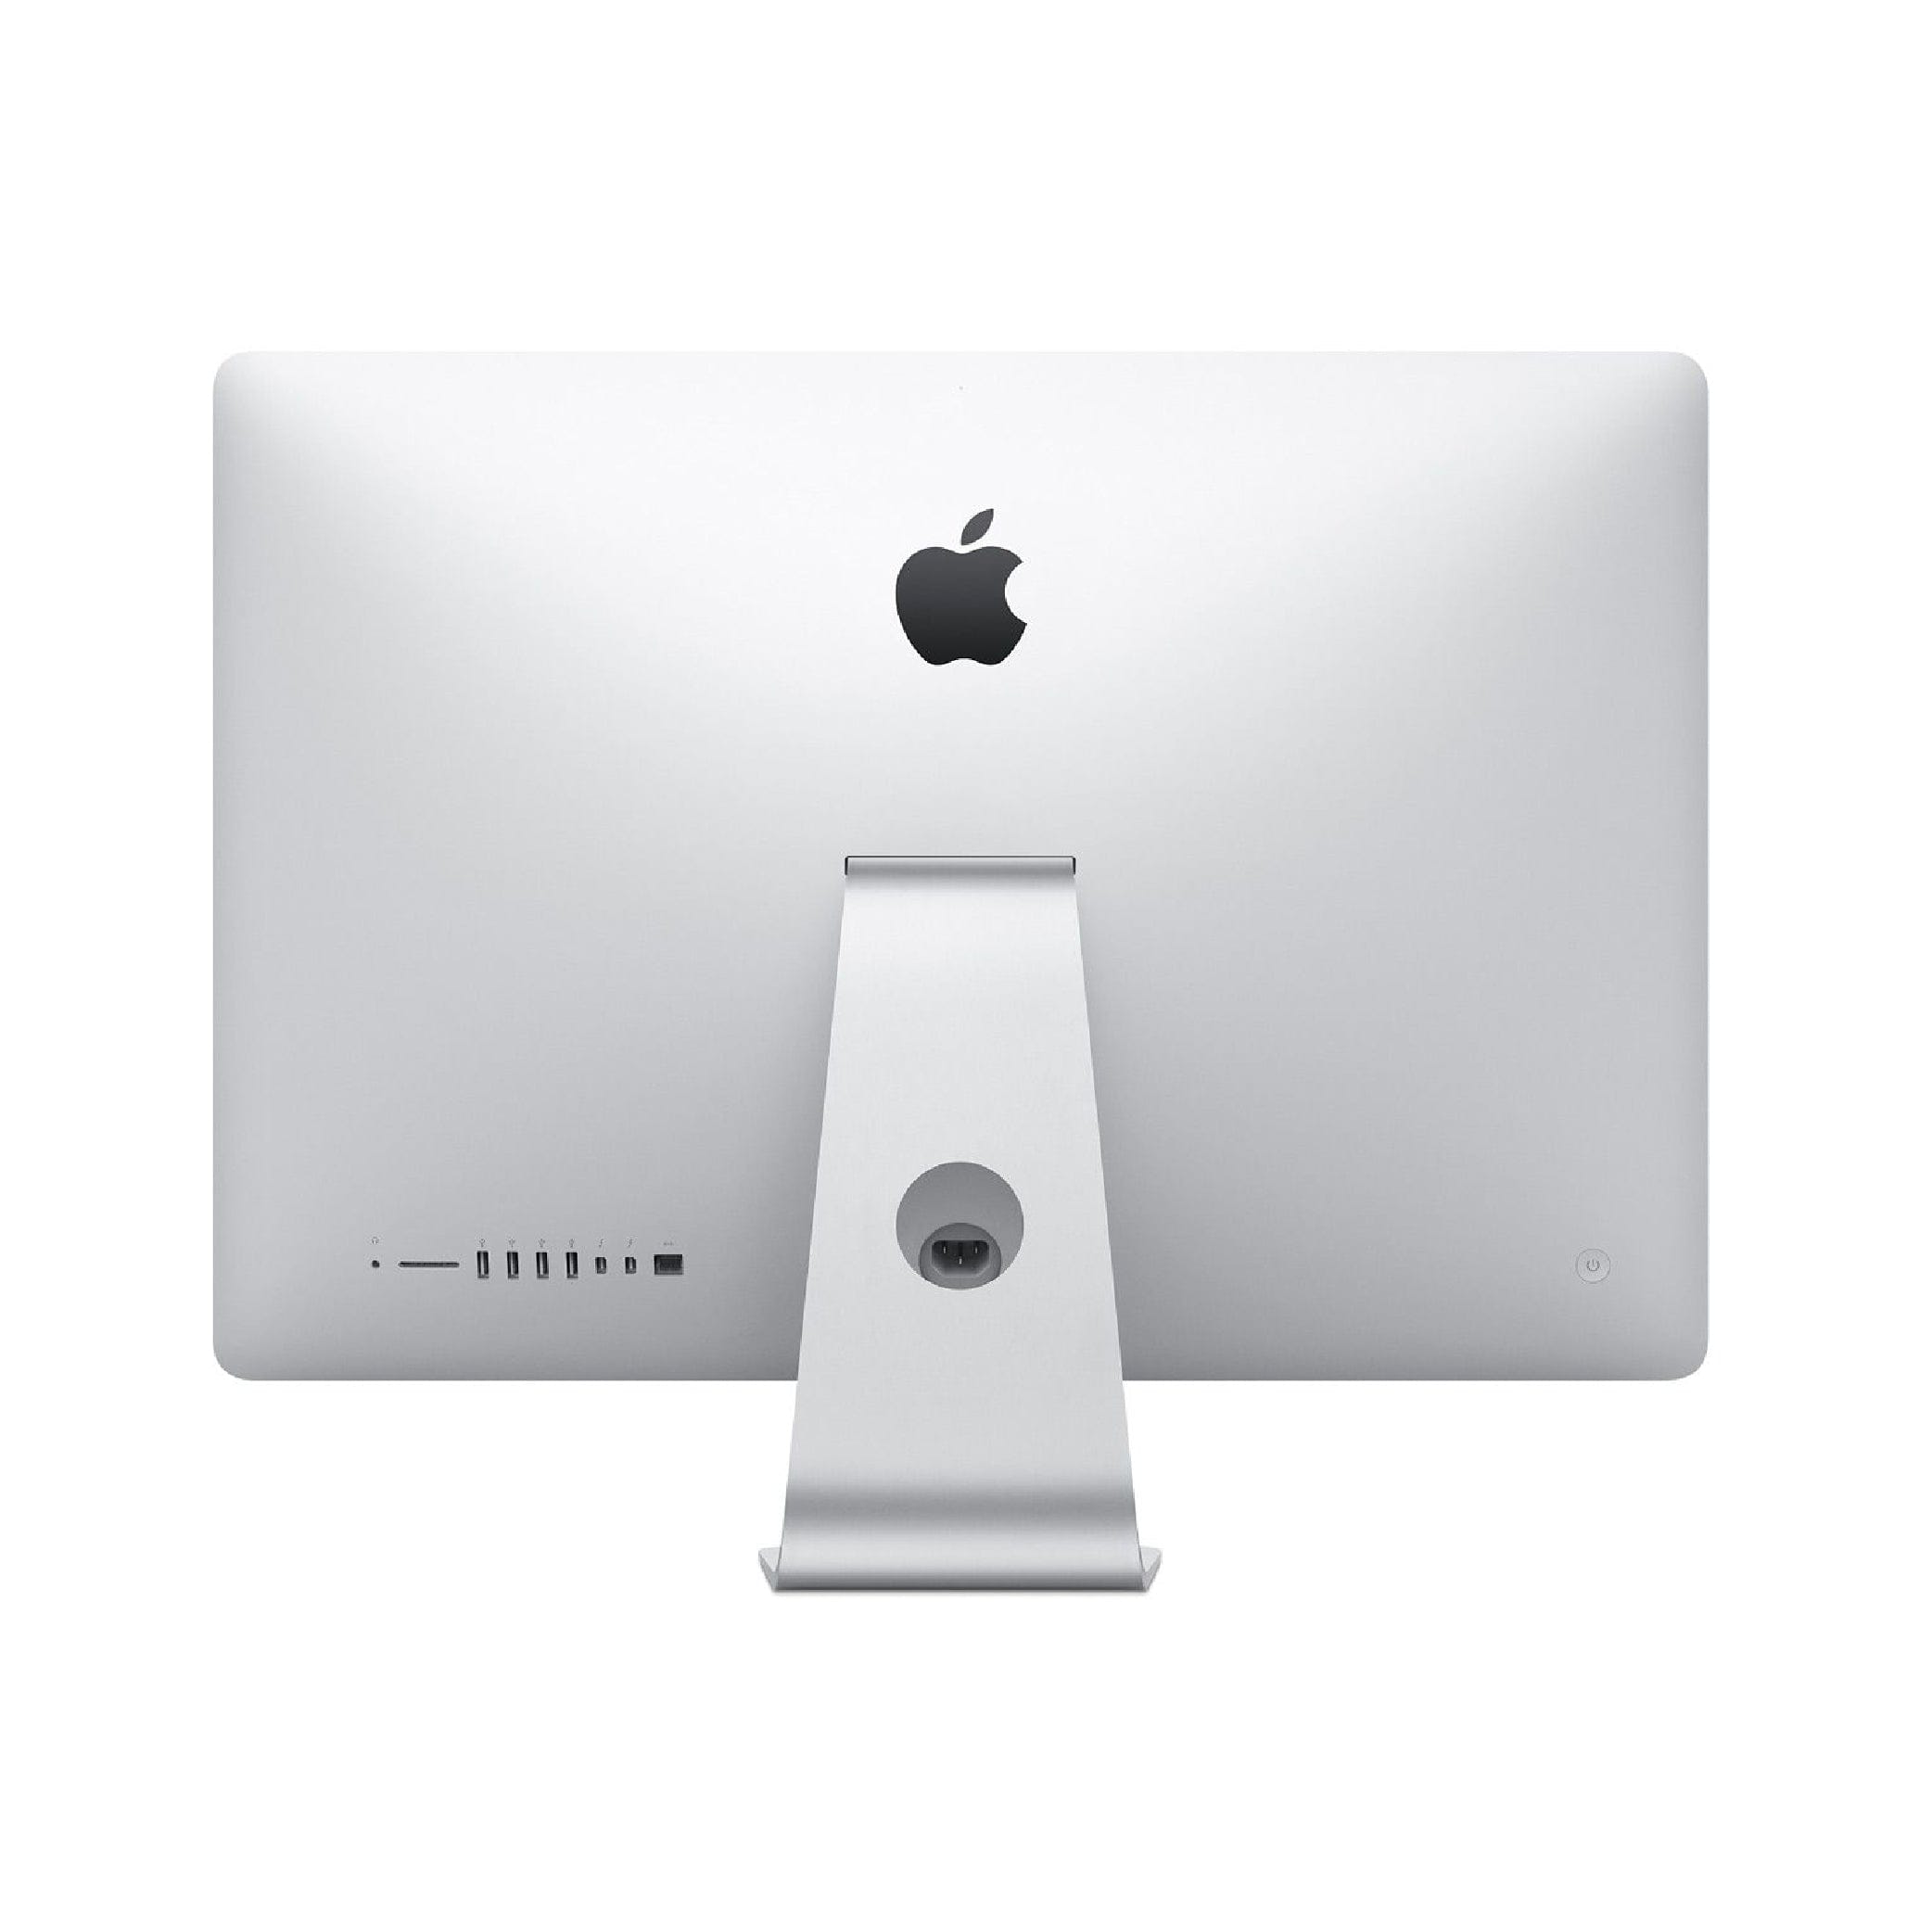 Apple - iMac 21.5" (2015) - Intel Core i5- 8GB Memory - 1TB HDD - Silver - (MK442LL/A)